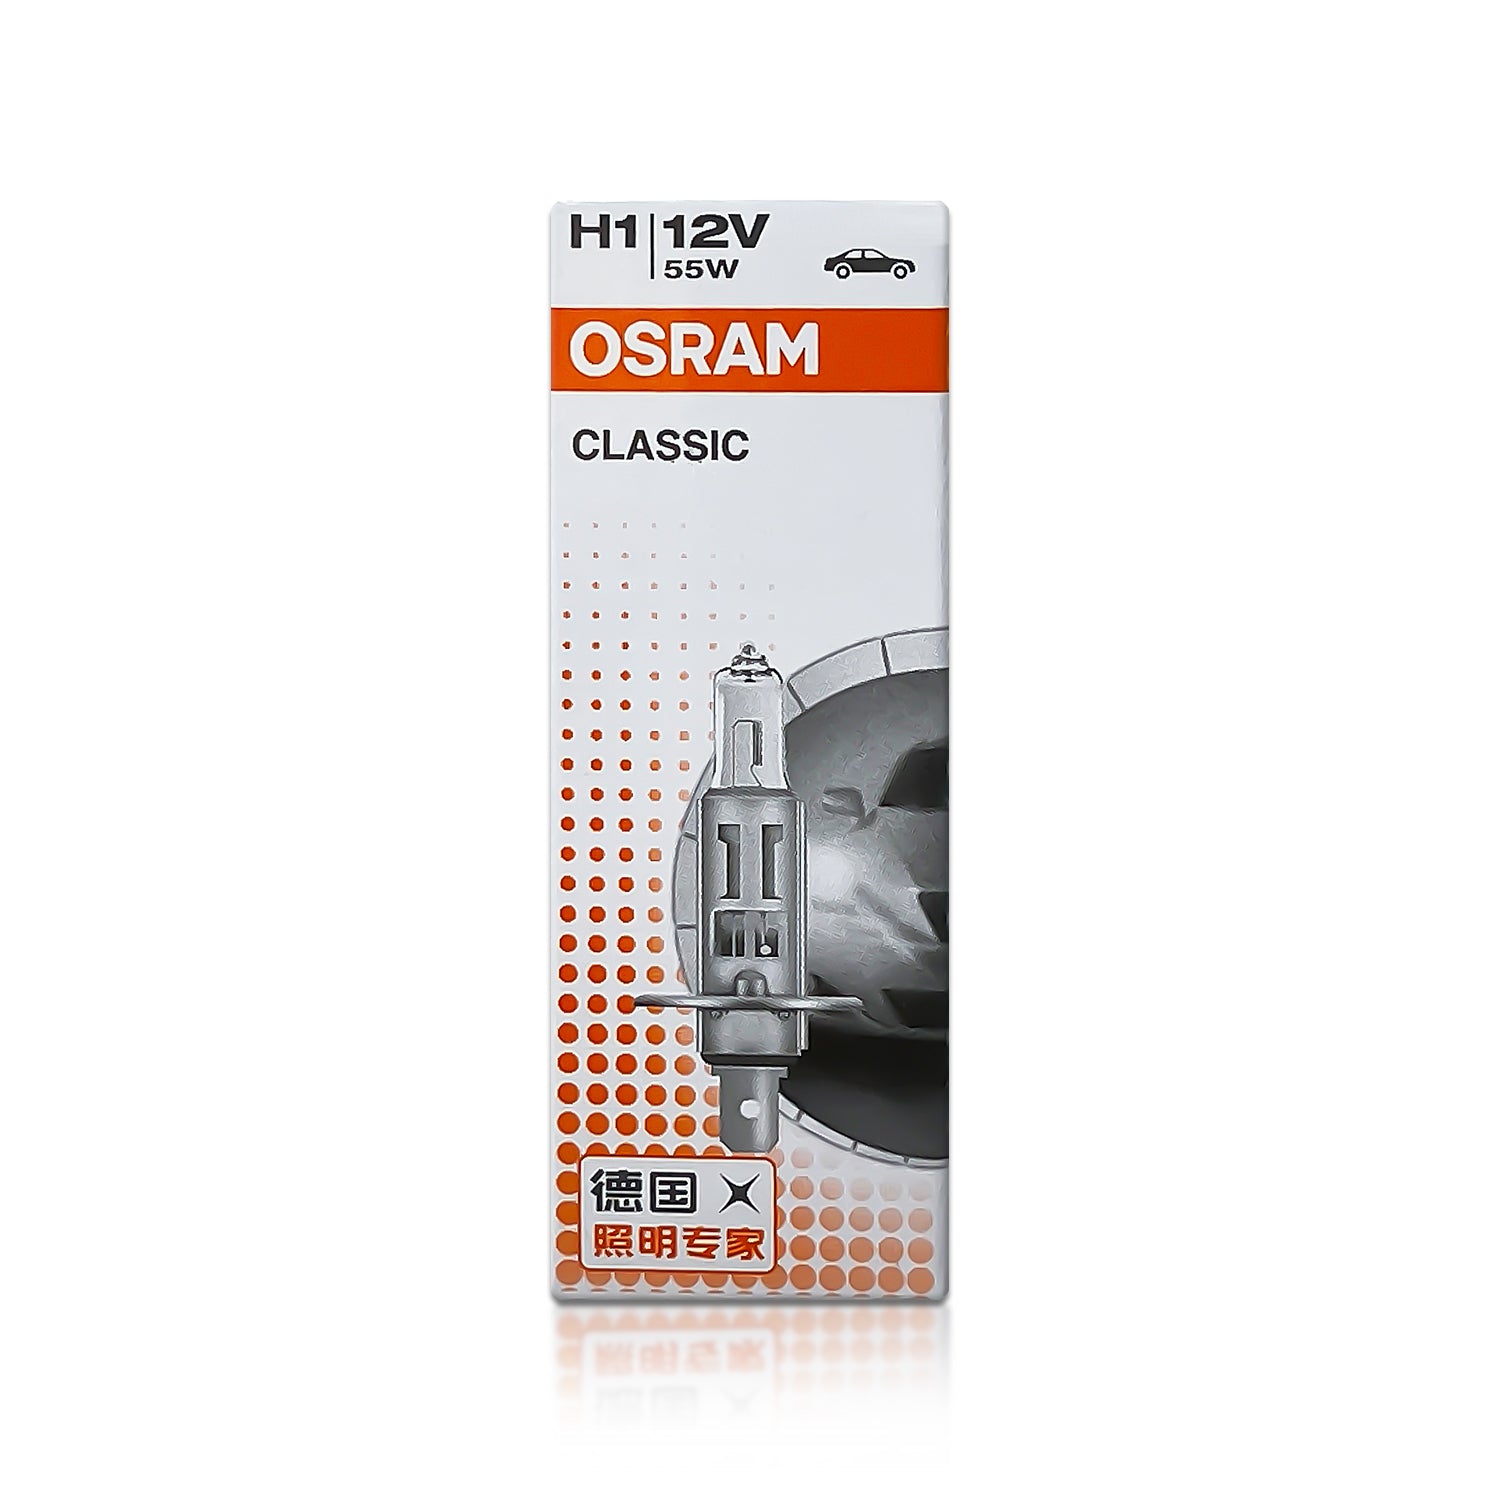 H1 - OSRAM 64150 Original Standard Halogen Bulbs Pack of 10 – HID